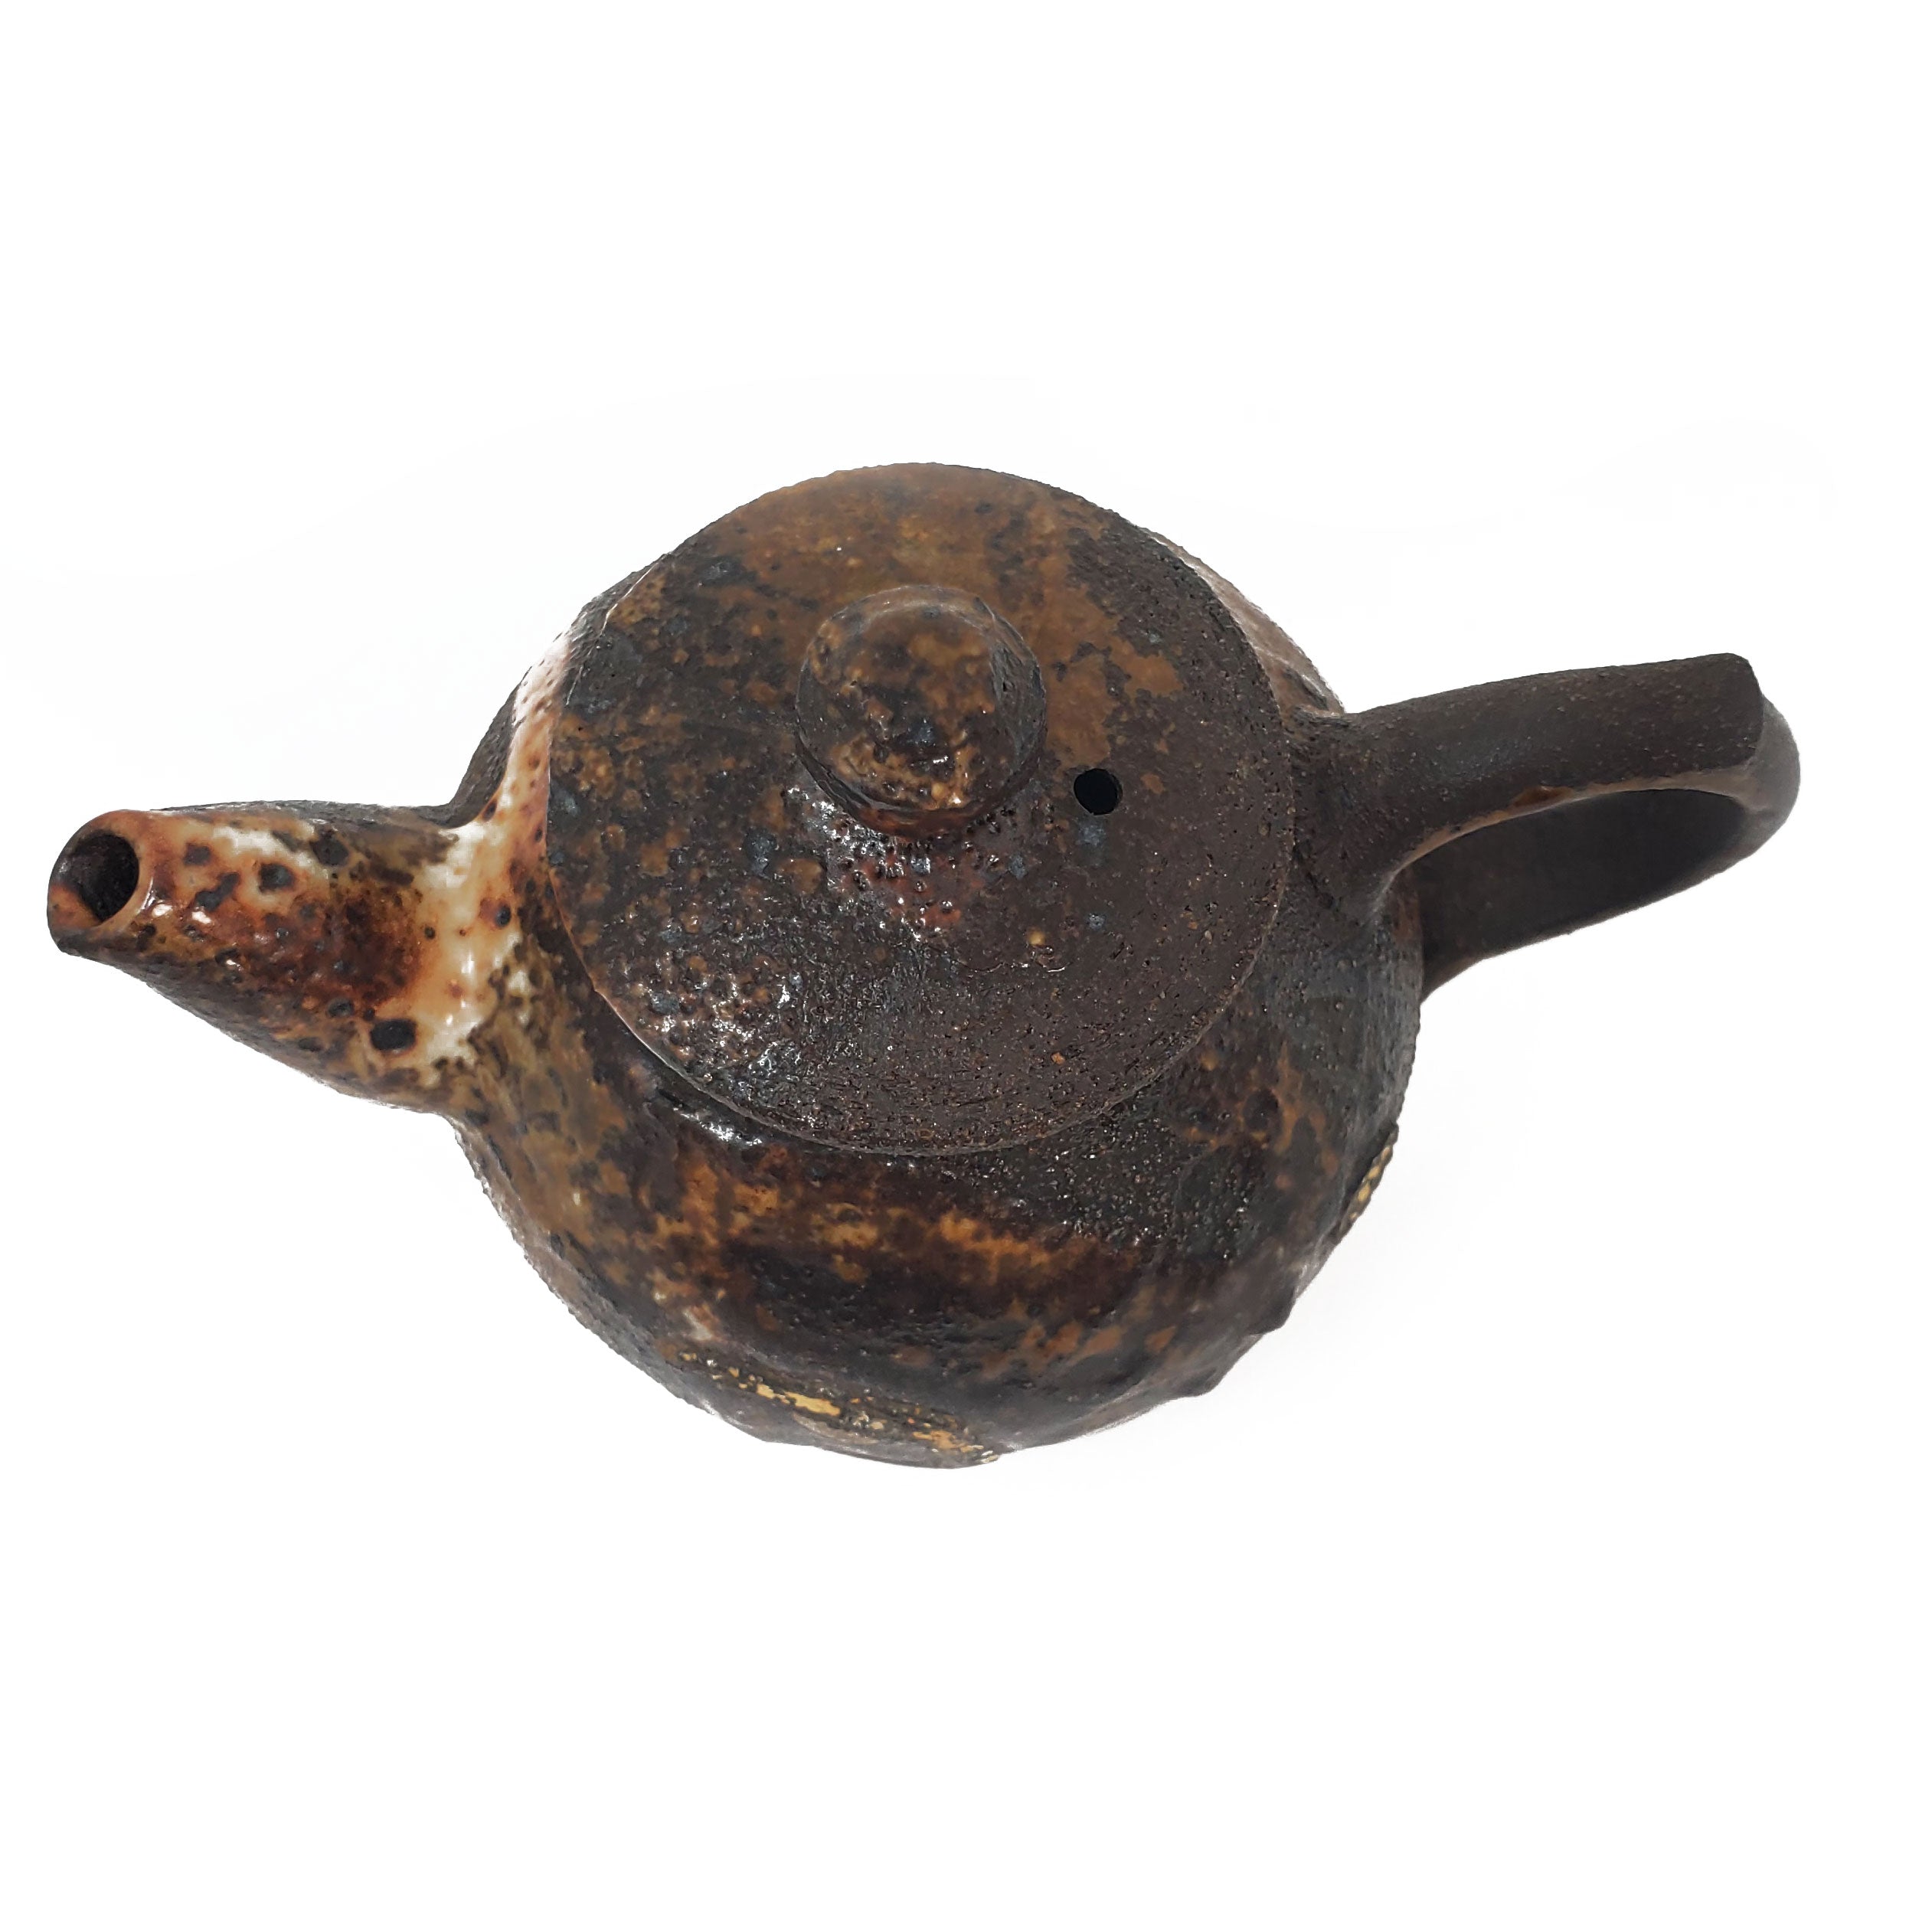 Wood-fired Rustic Teapot